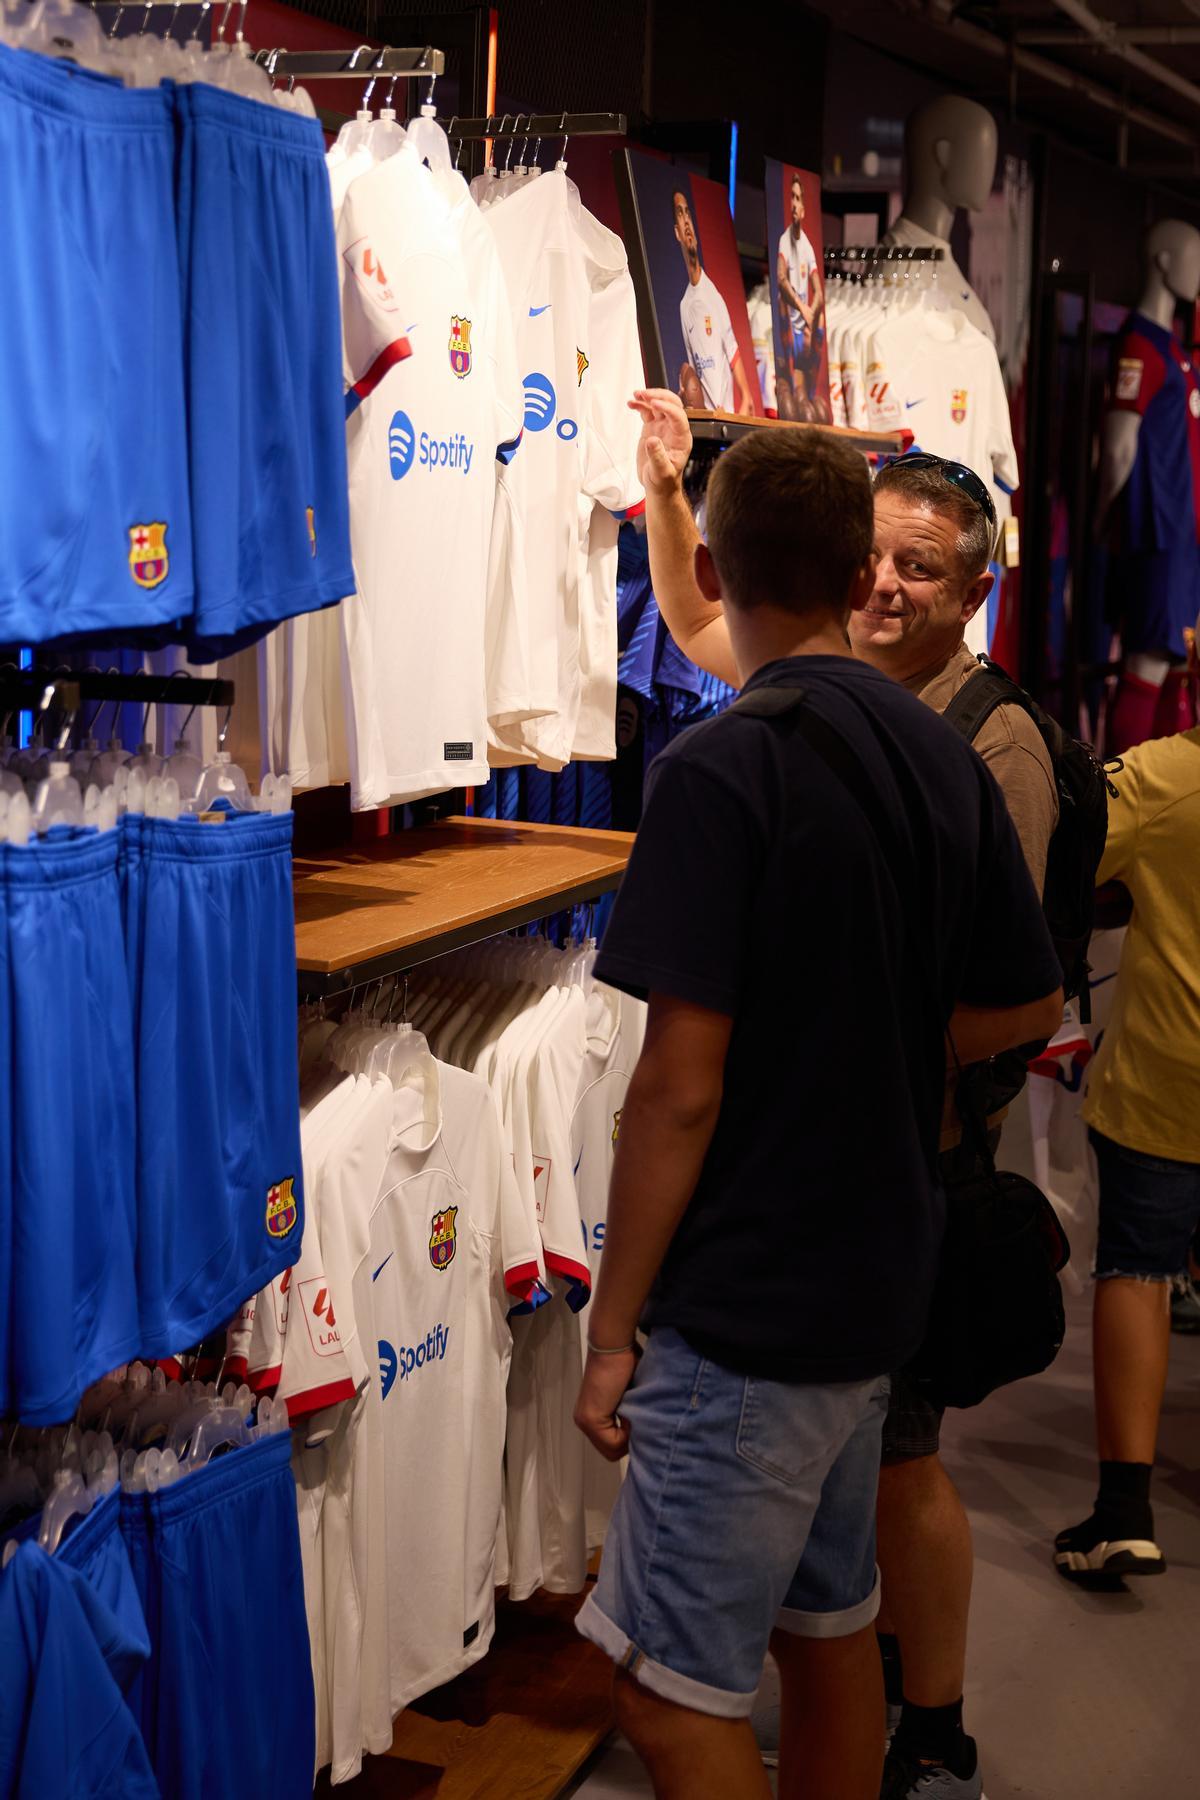 Marcas de ropa deportiva sondean al Barça